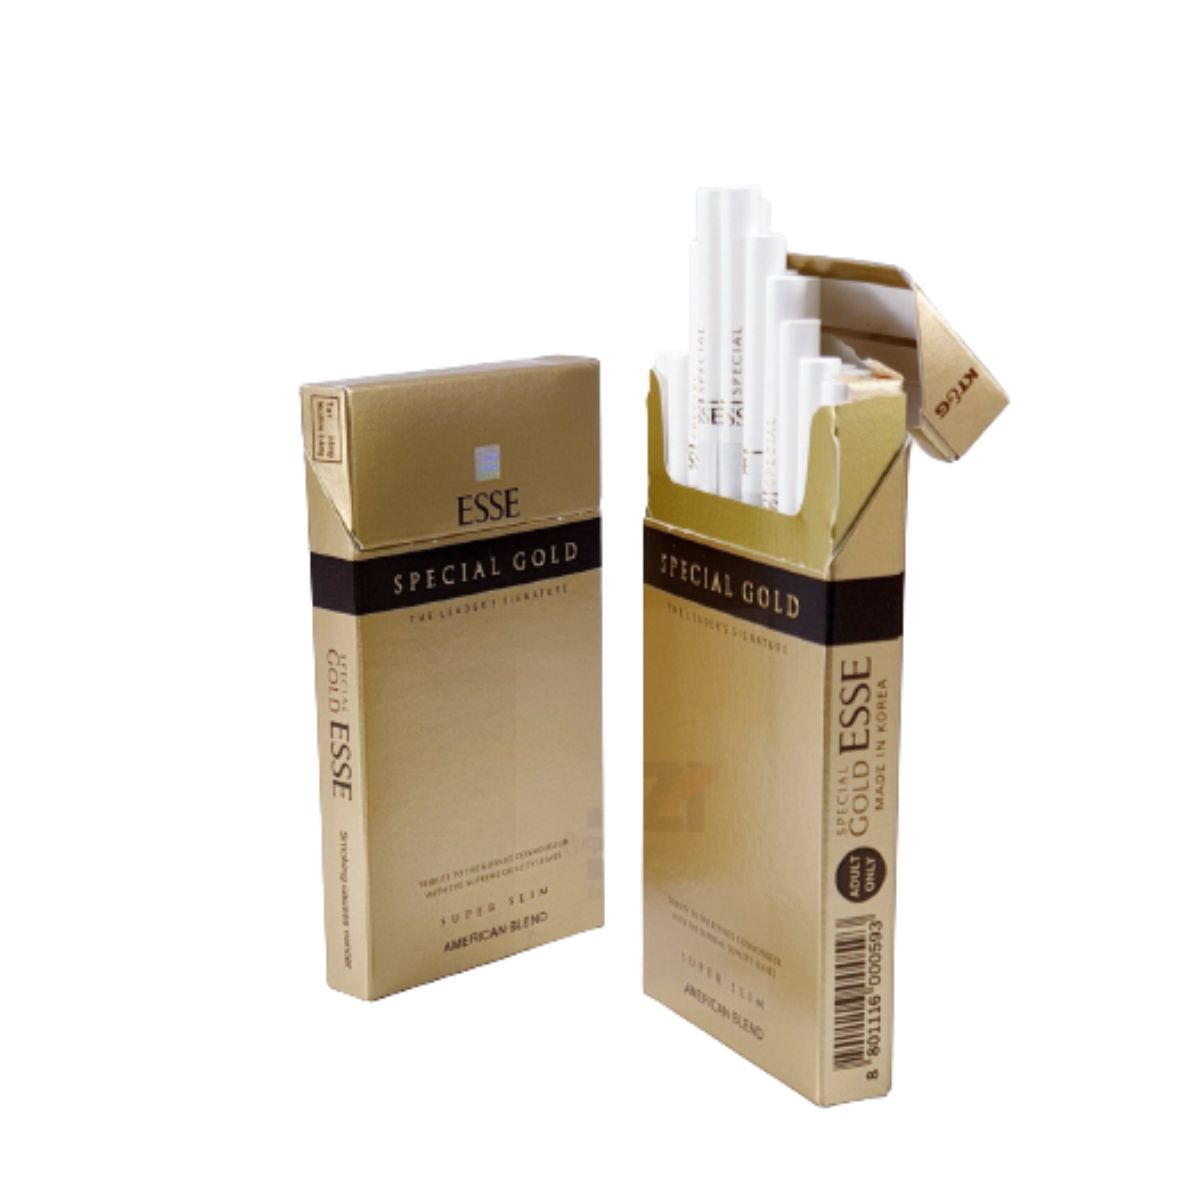 Esse Special Gold - Super Slim American Blend Cigarettes - Pack Of 20 Pcs